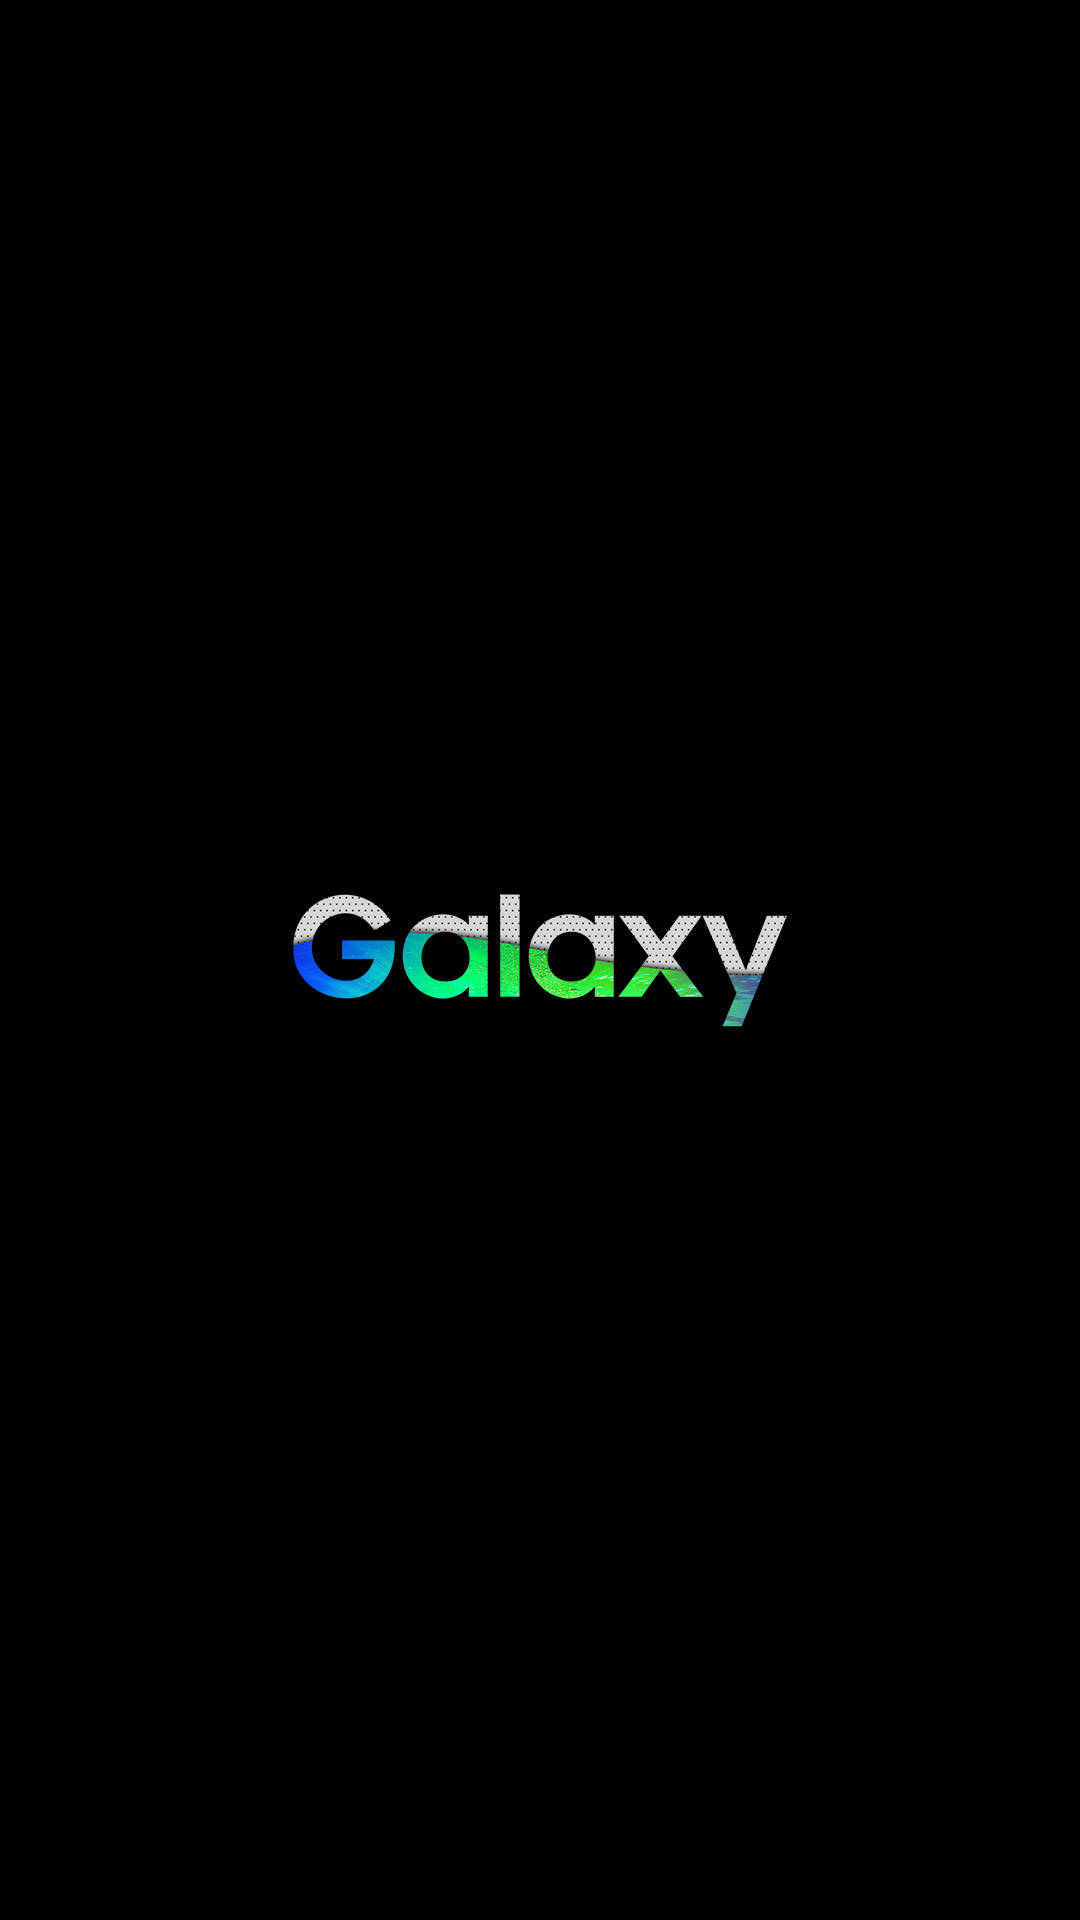 Samsung Galaxy Abstract Logo Pattern Wallpaper